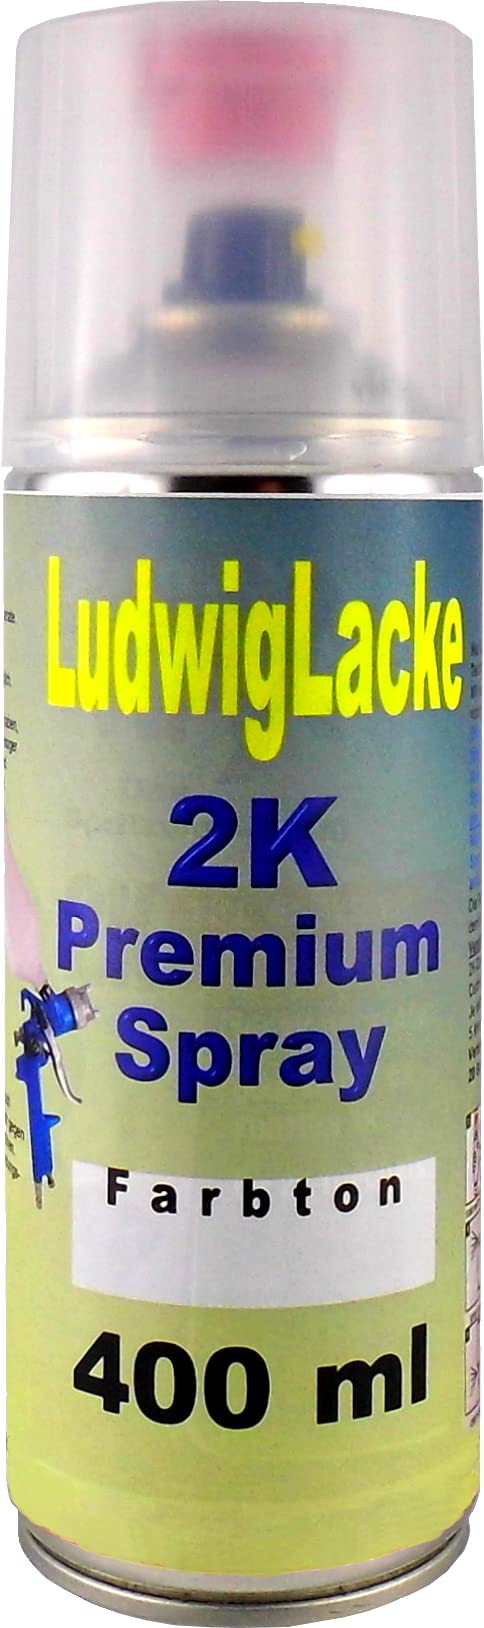 RAL 7004 SIGNALGRAU 2K Premium Spray SEIDENMATT 400ml von Ludwig Lacke